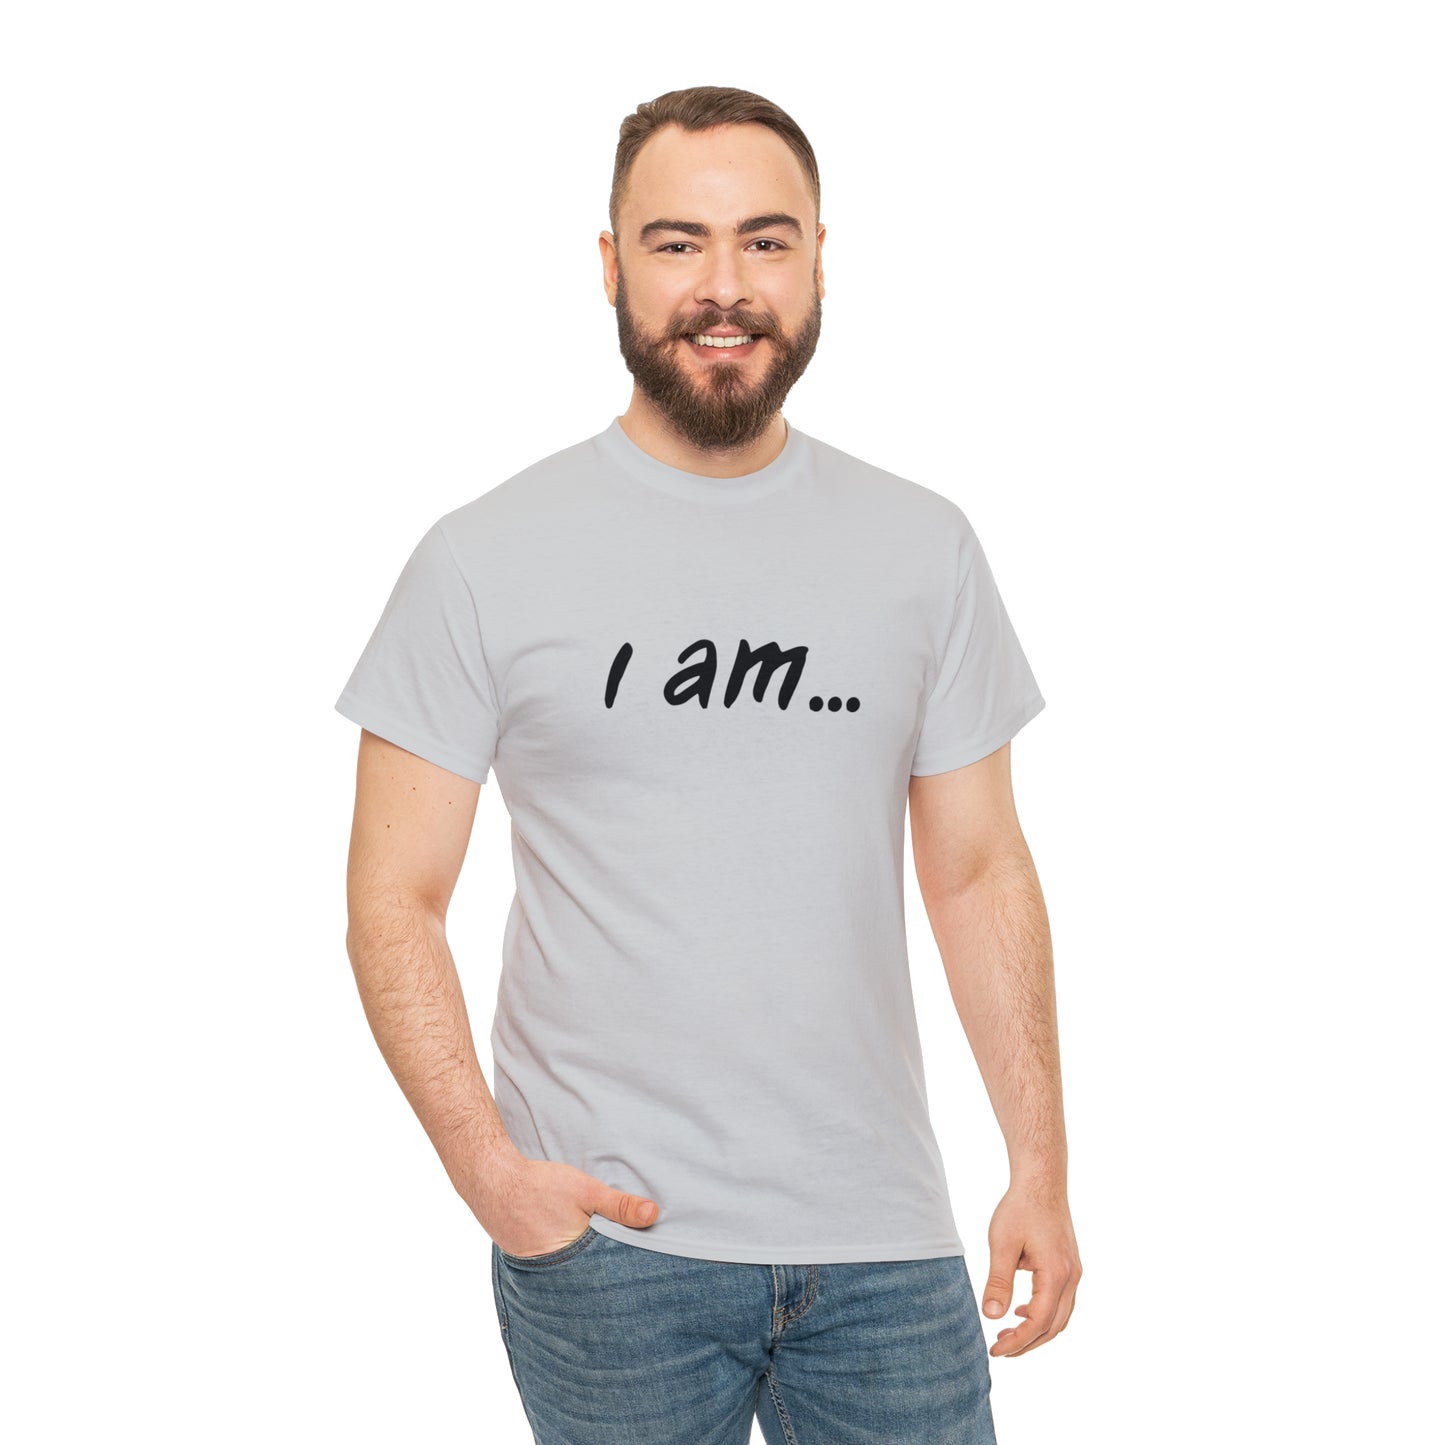 'i am...rainbow people'  -  Unisex Heavy Cotton Tee